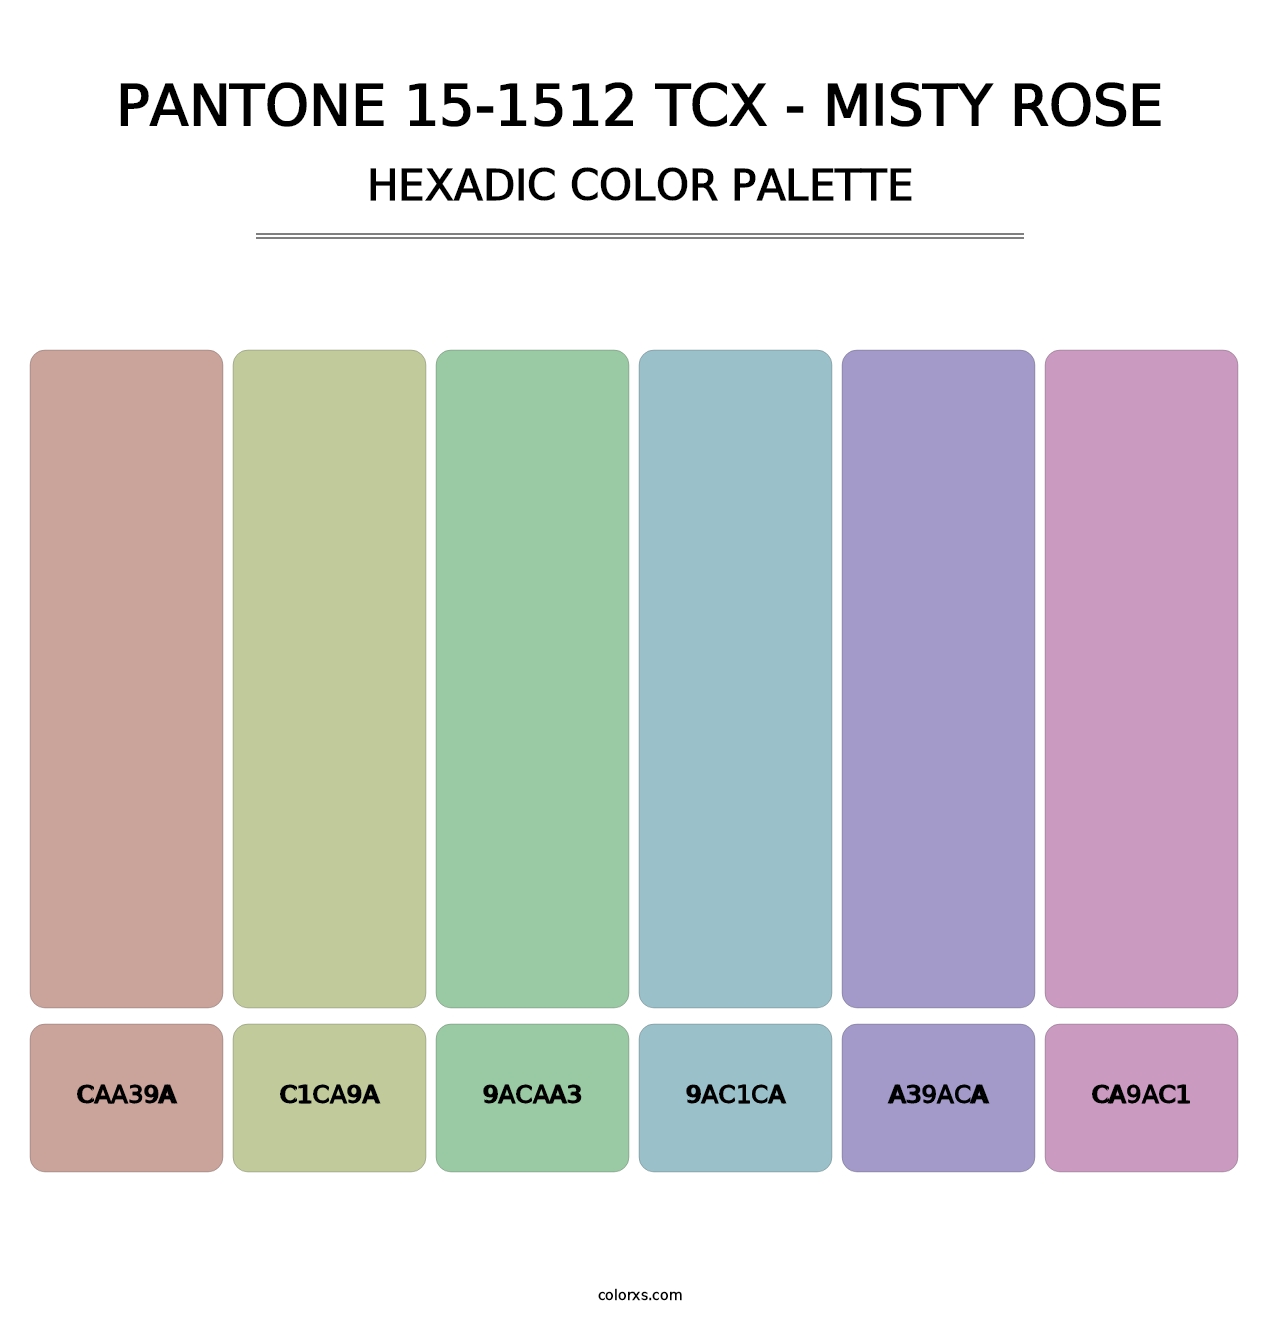 PANTONE 15-1512 TCX - Misty Rose - Hexadic Color Palette